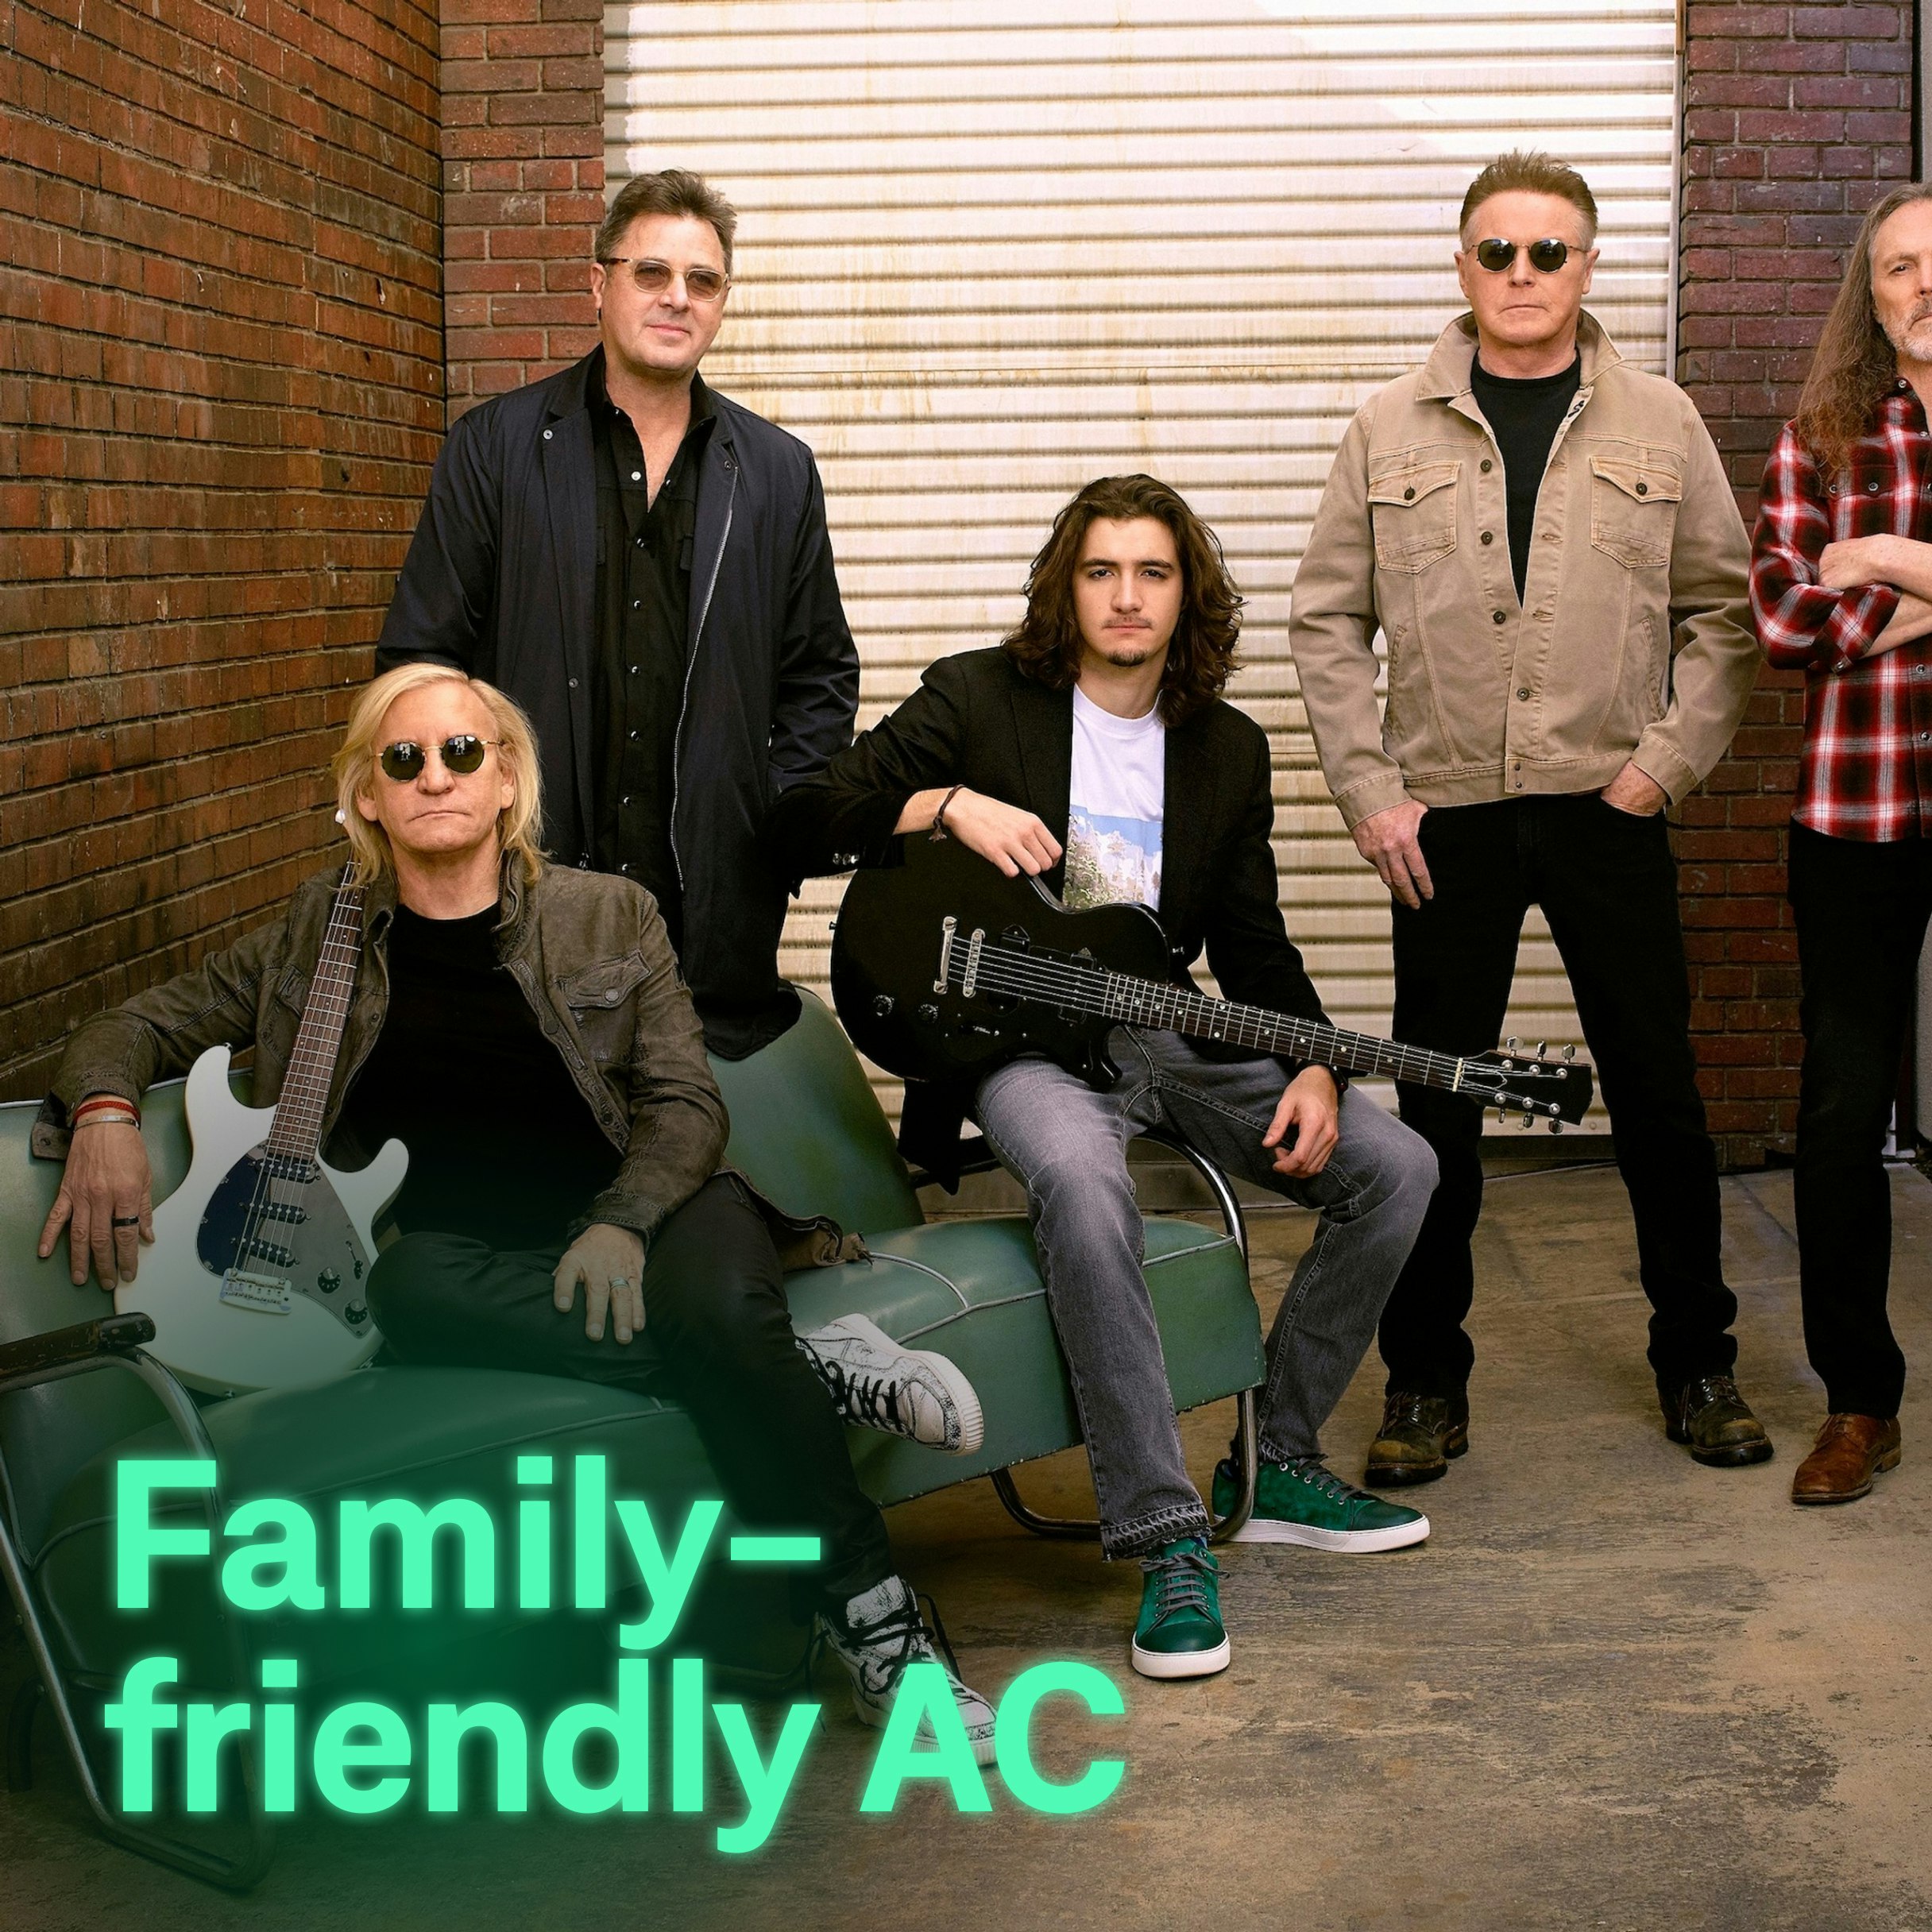 Family-friendly AC